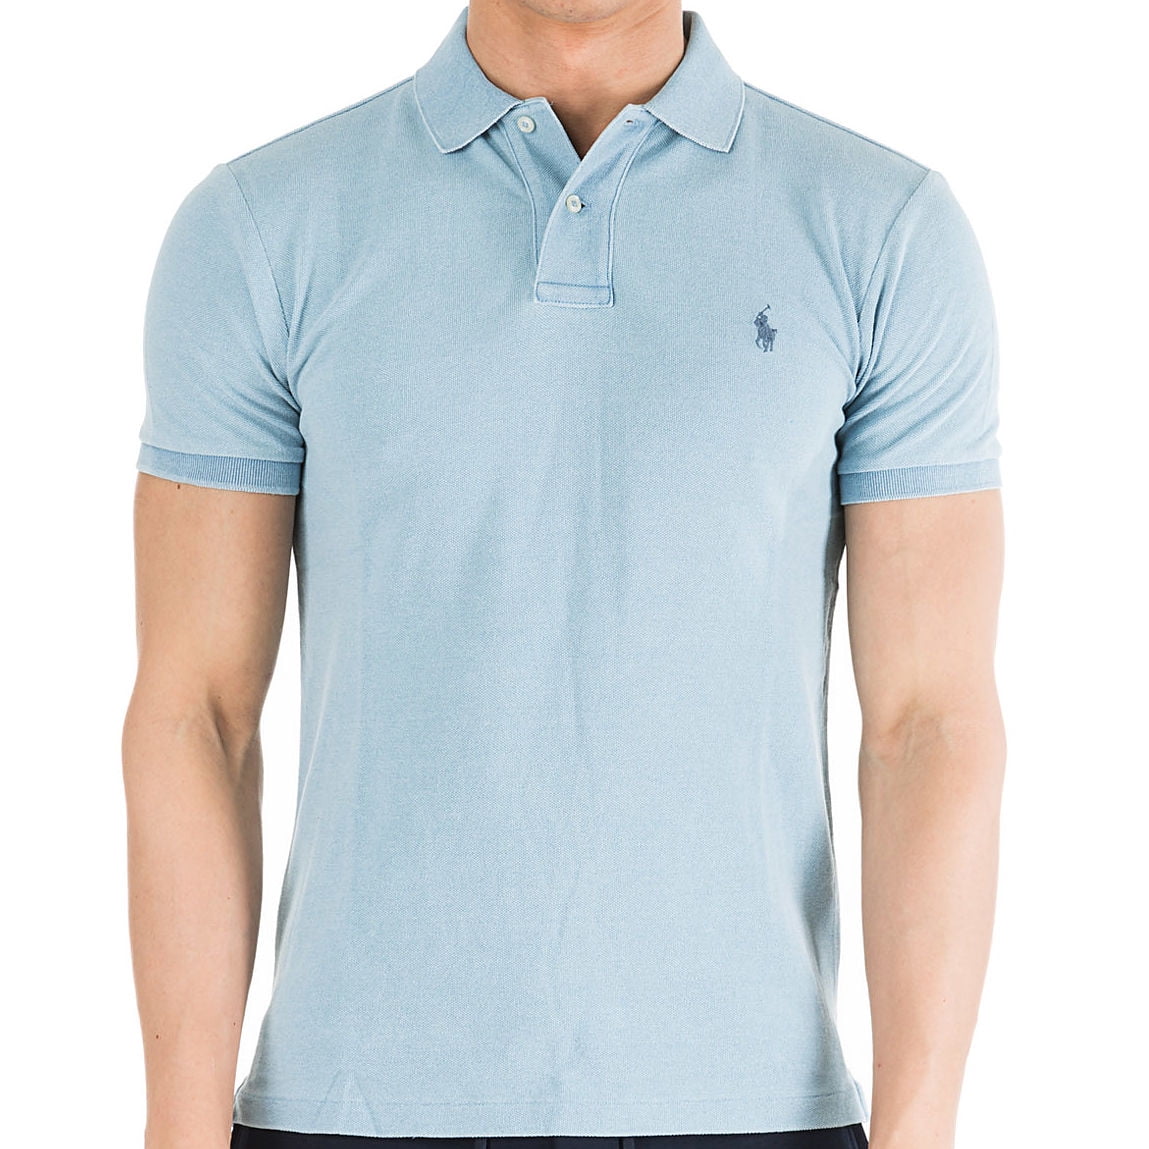 kom over Merchandiser Spis aftensmad POLO by Ralph Lauren Mens Cotton Slim Fit Polo Shirt (Large, Light Blue) -  Walmart.com